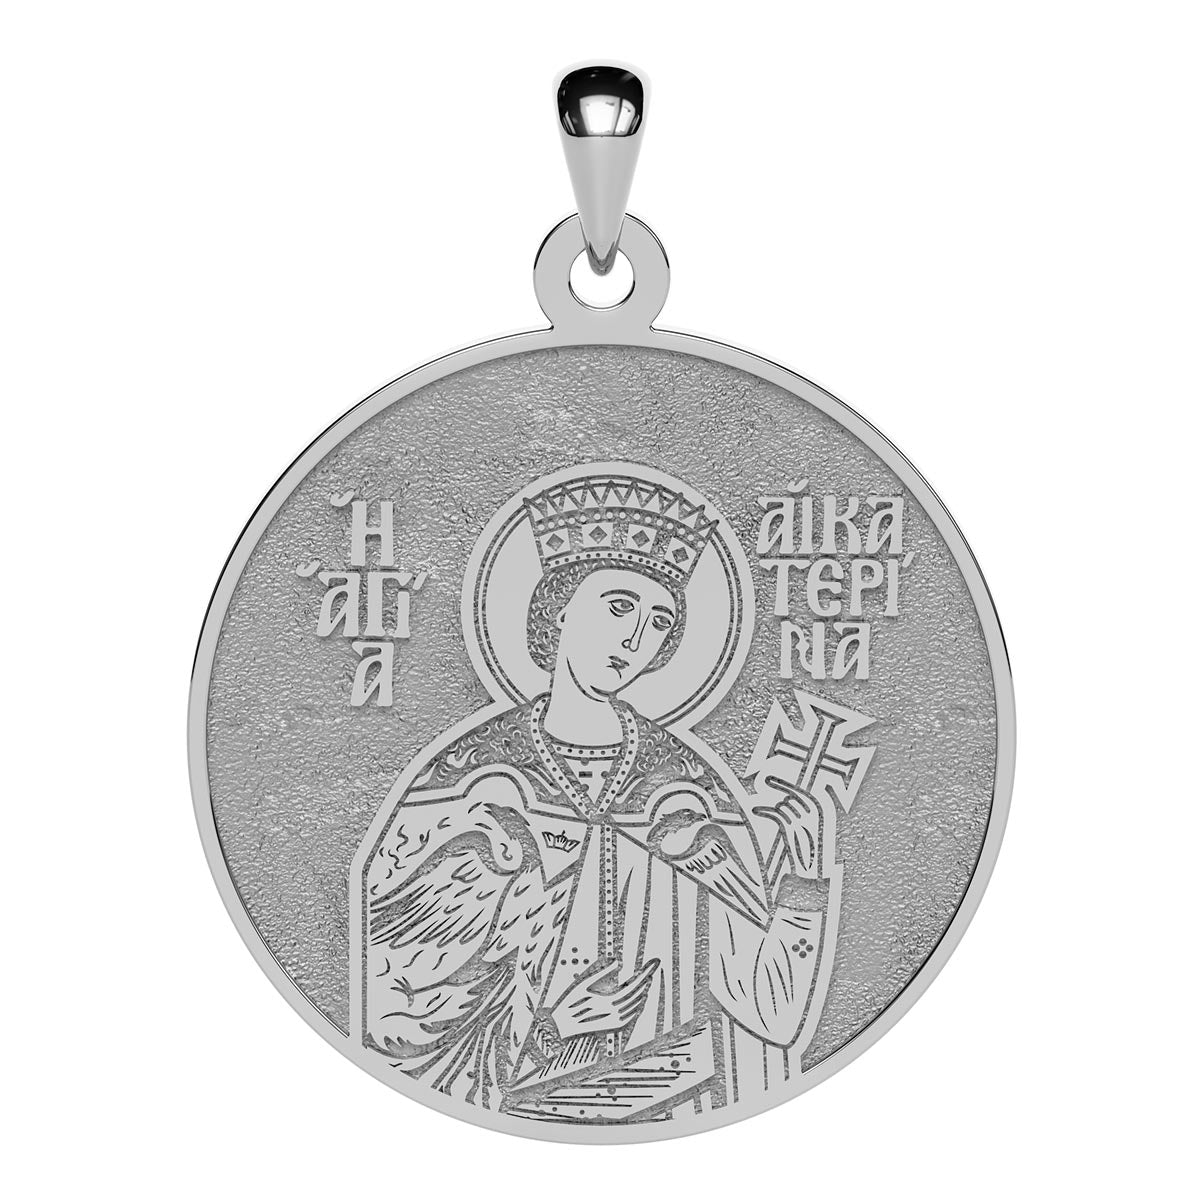 Saint Catherine (Katherine) Greek Orthodox Icon Round Medal